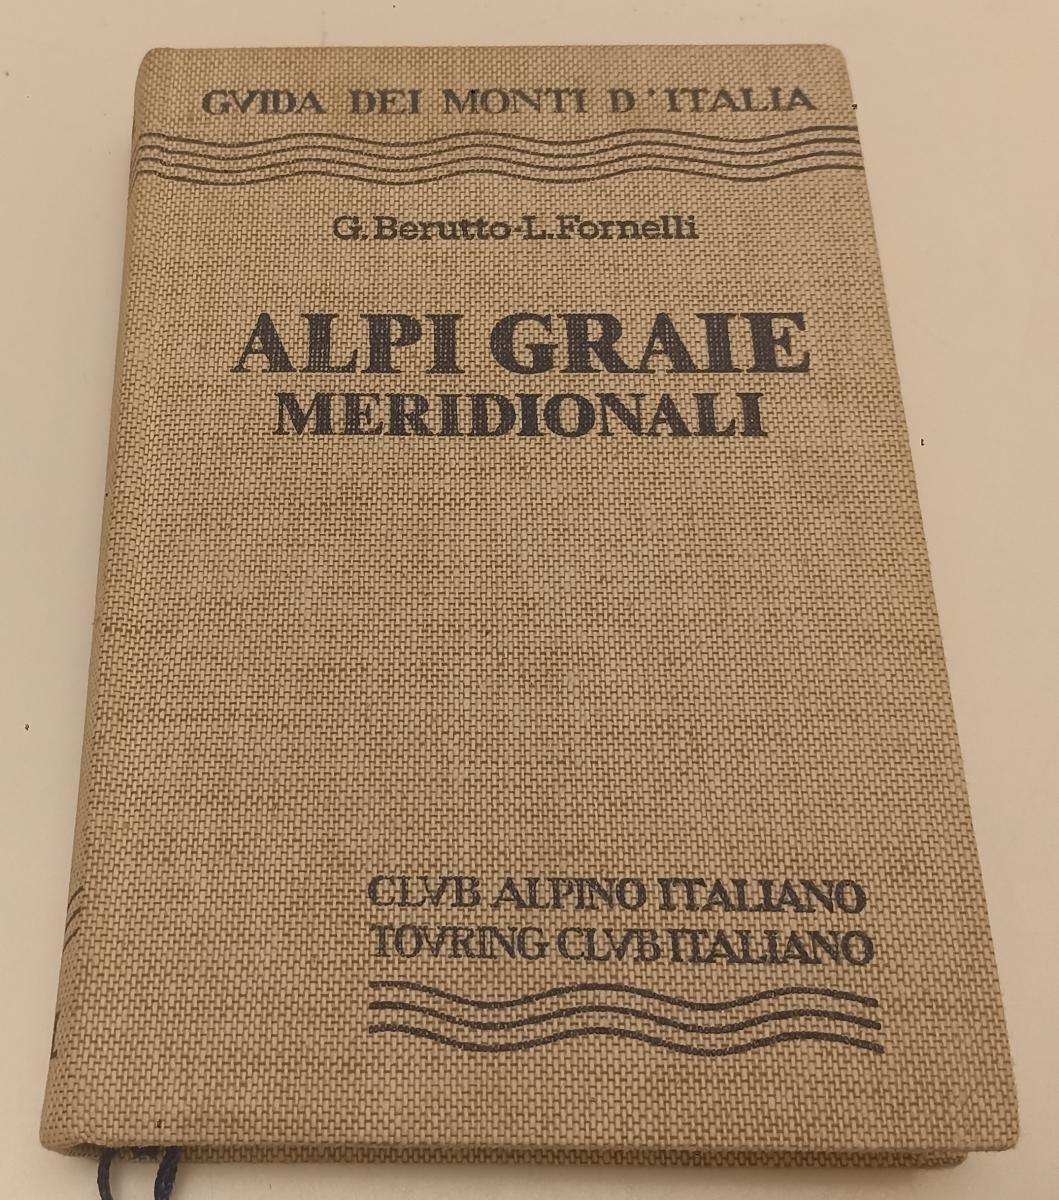 LV- GUIDA DEI MONTI D'ITALIA ALPI GRAIE MERIDIONALI-- TOURING TCI- 1980- C-XFS92